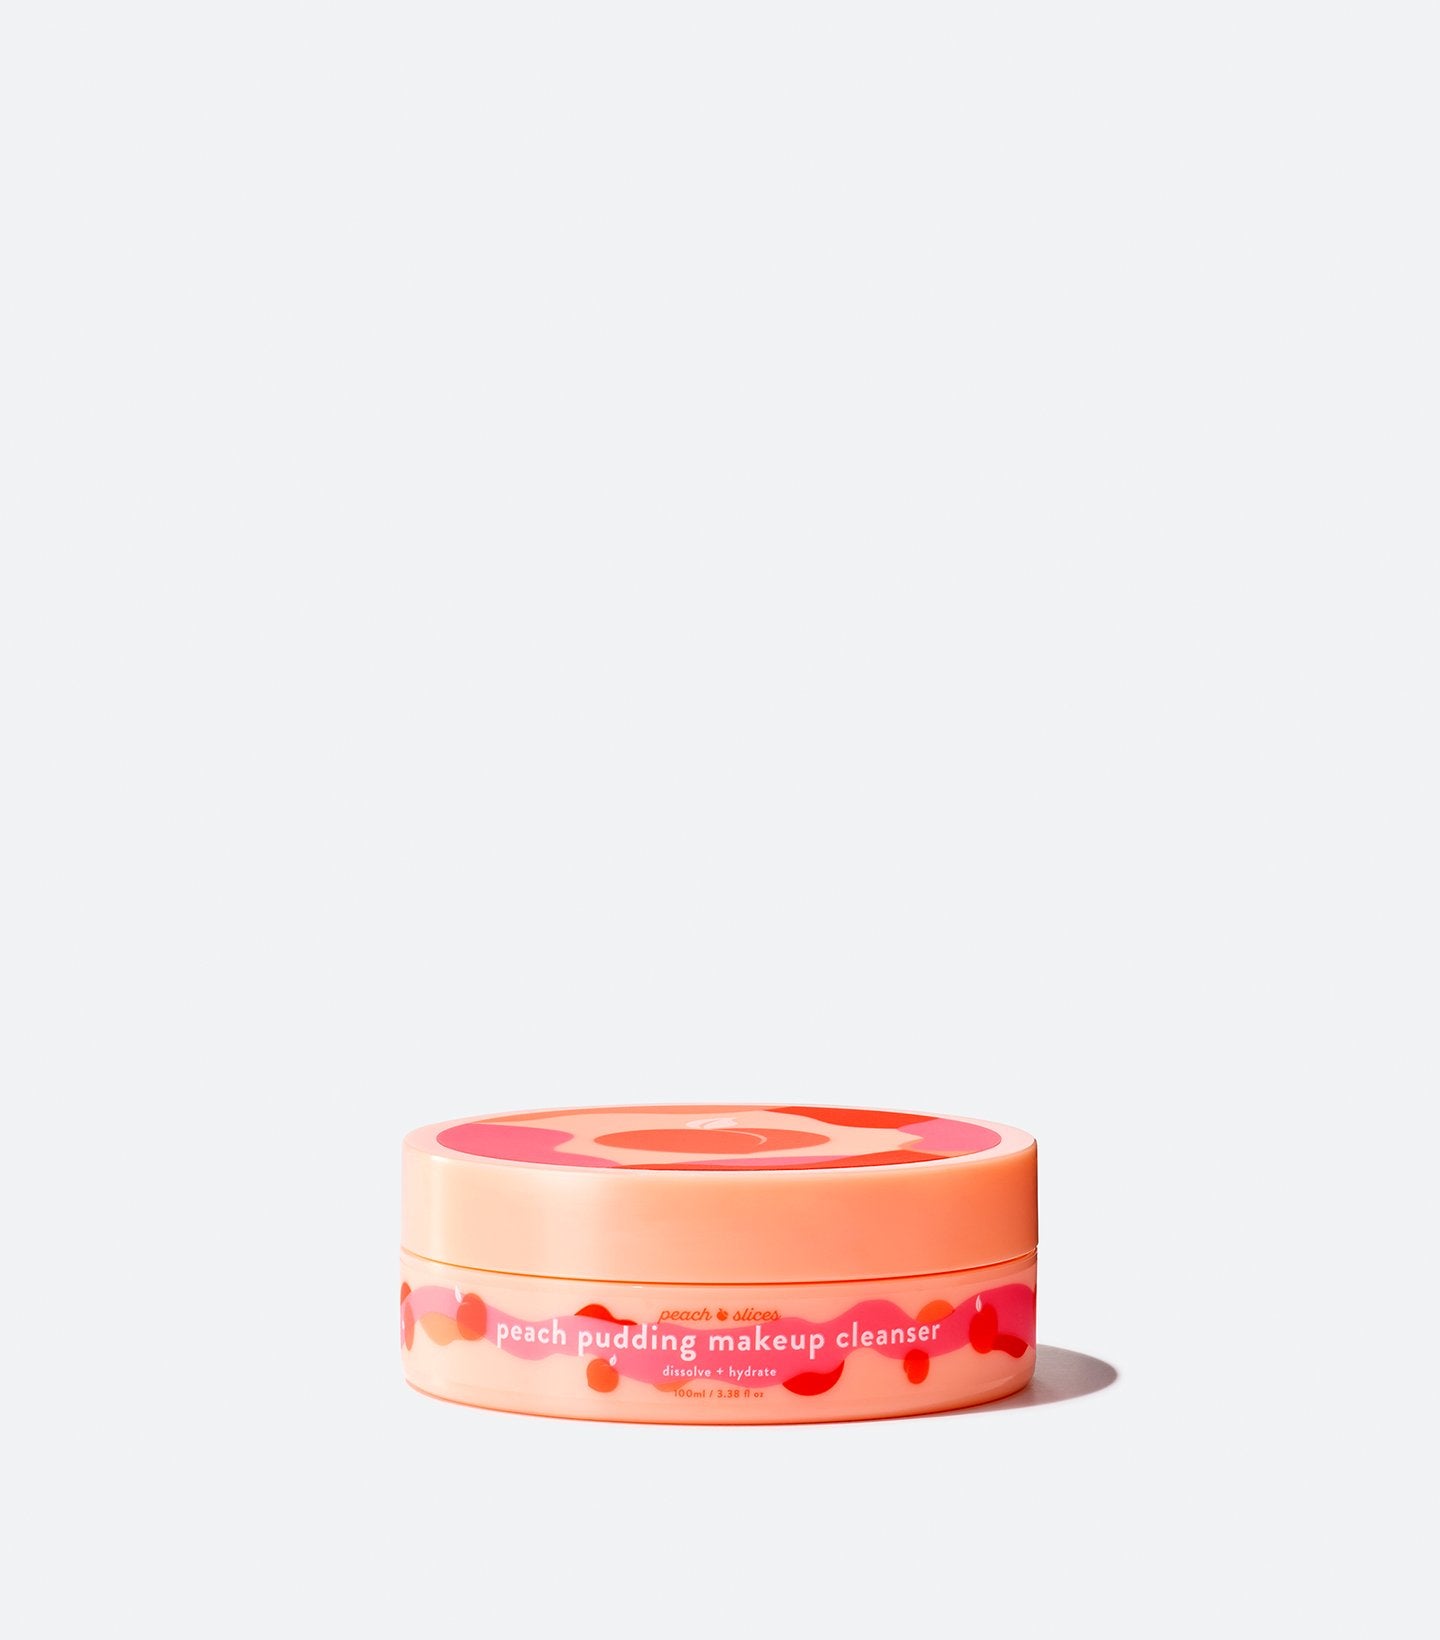 A squat jar of Peach Slices Peach Pudding Makeup Cleanser